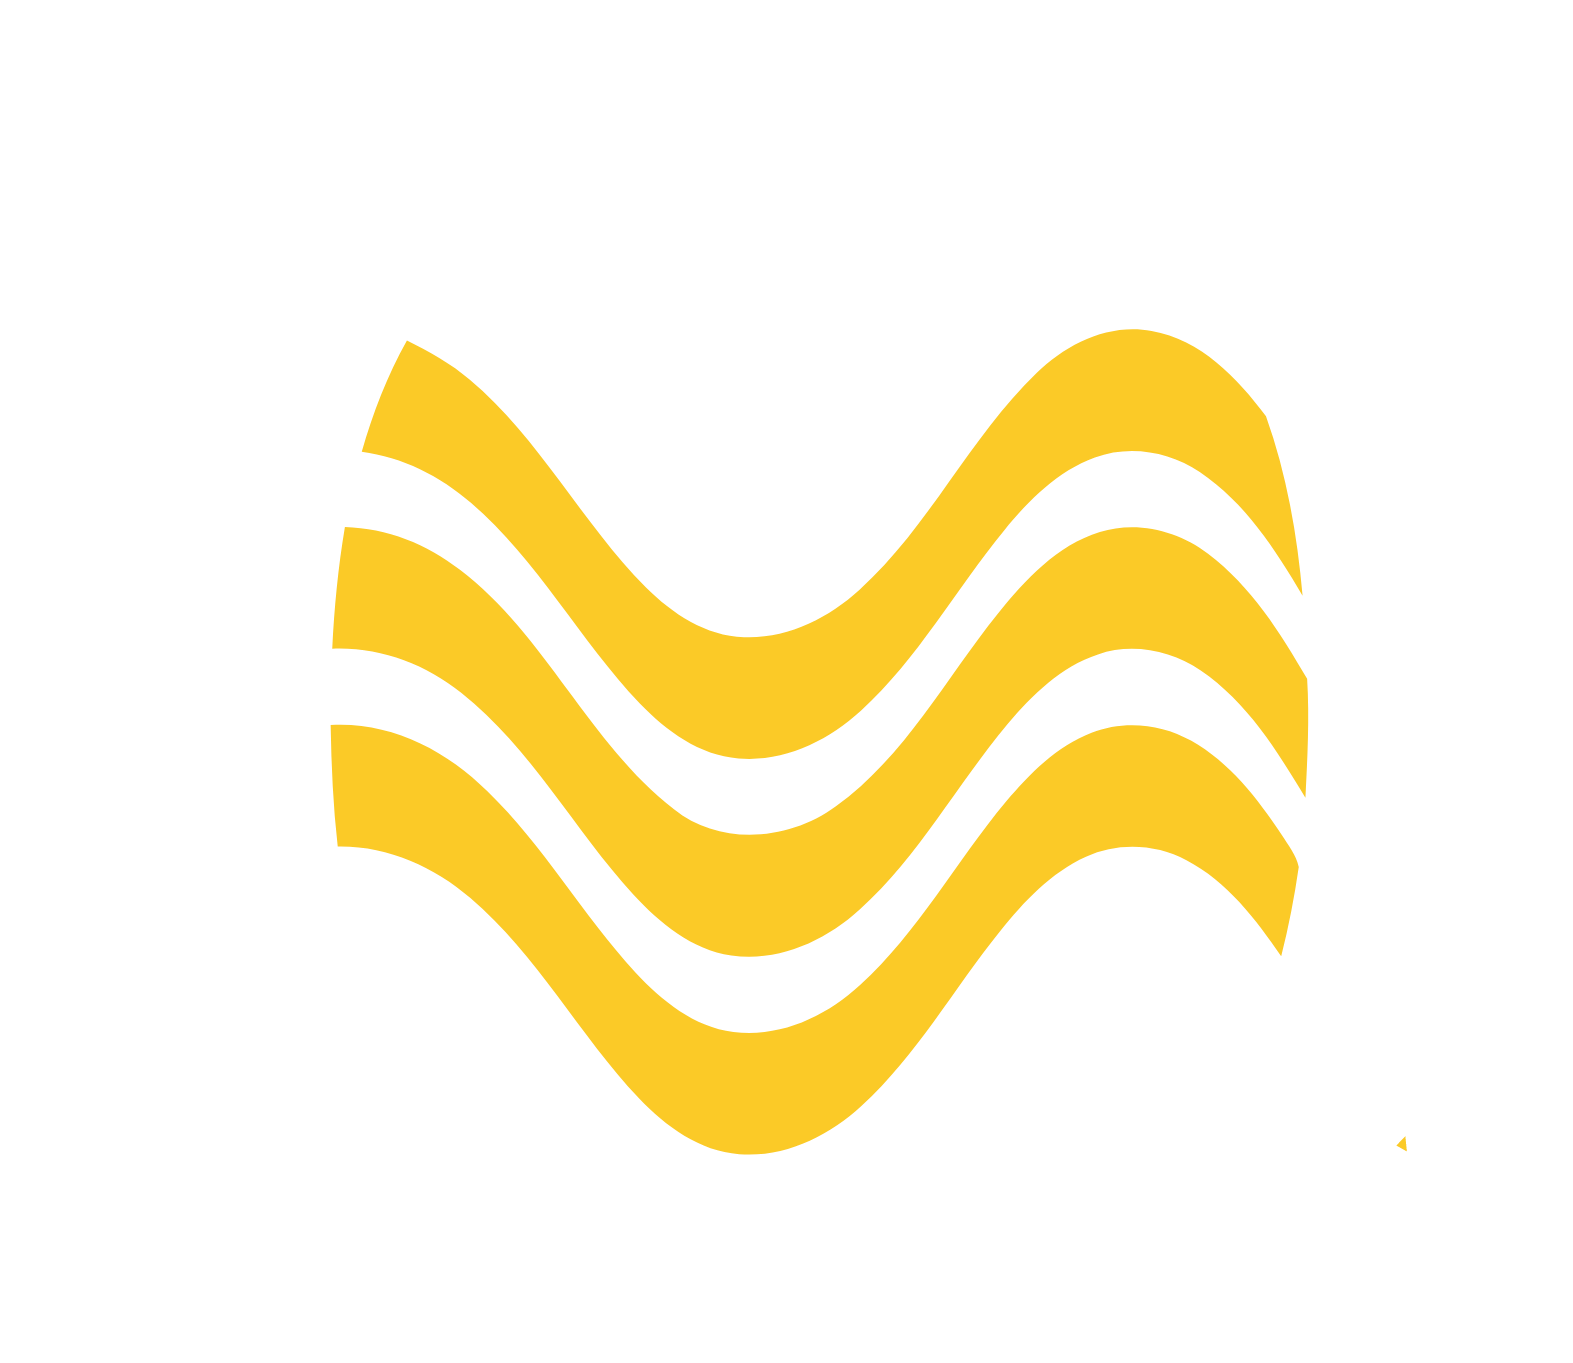 Fortis logo pour fonds sombres (PNG transparent)